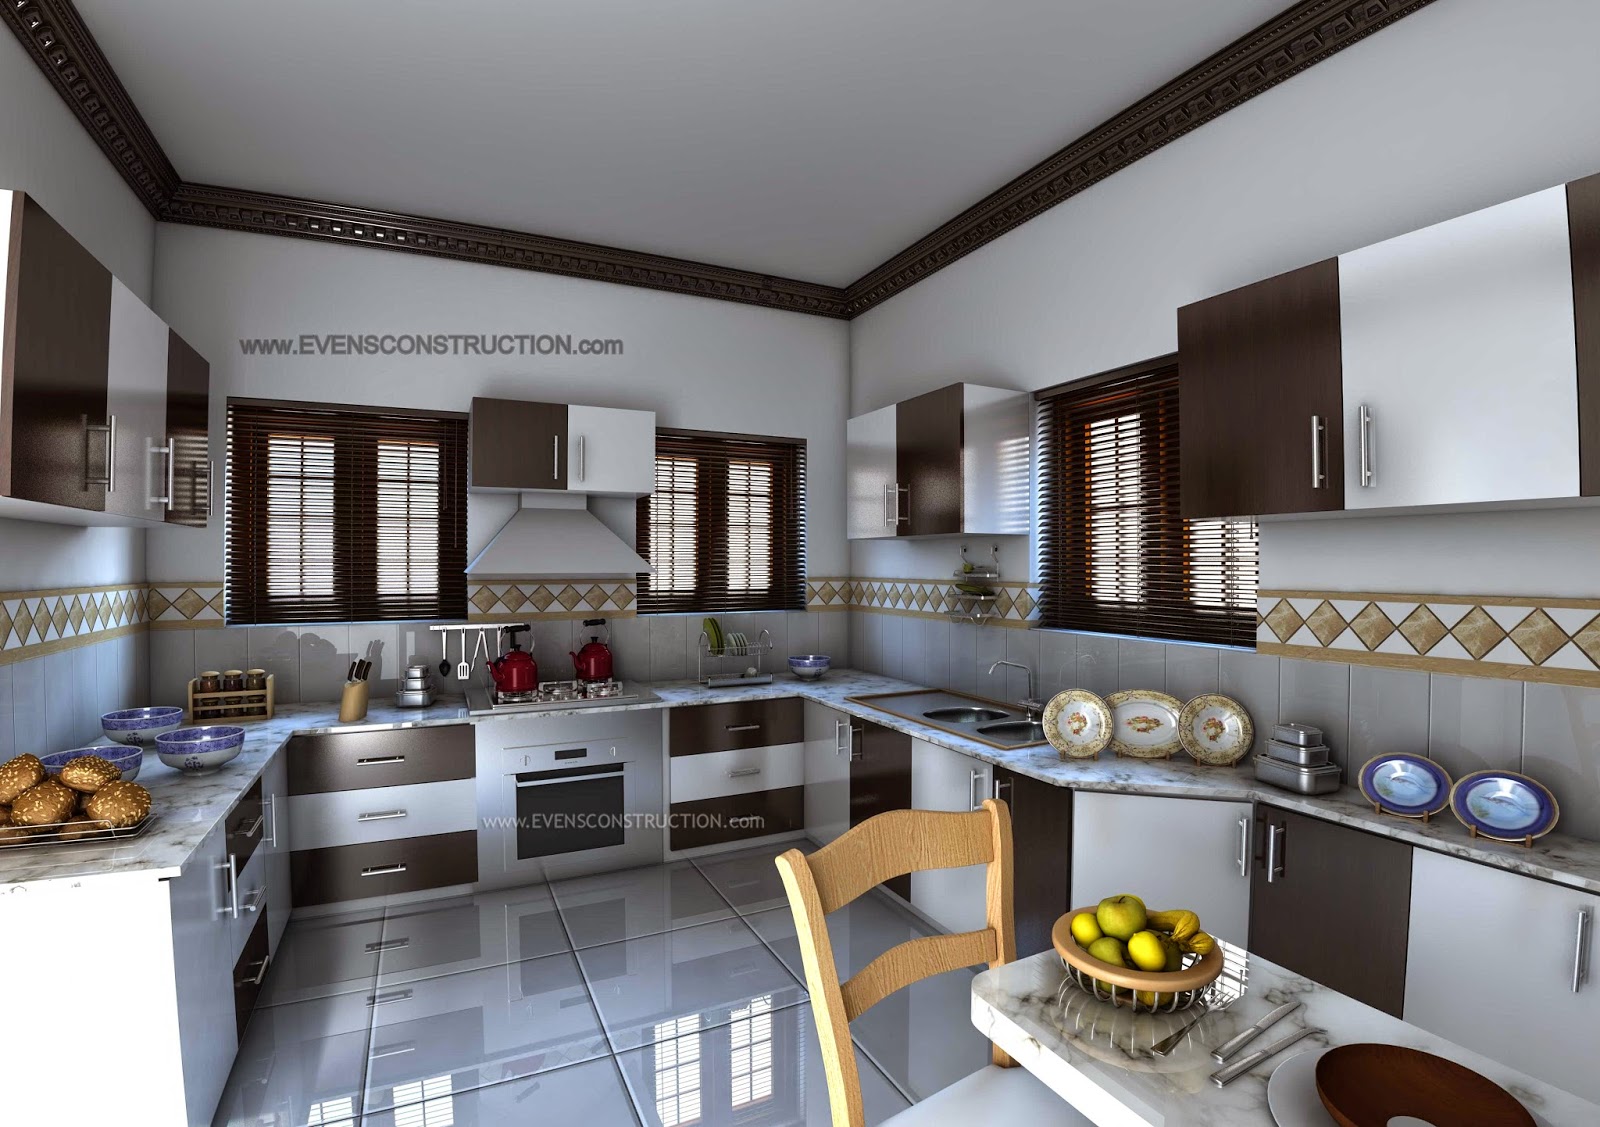 new kitchen design in kerala